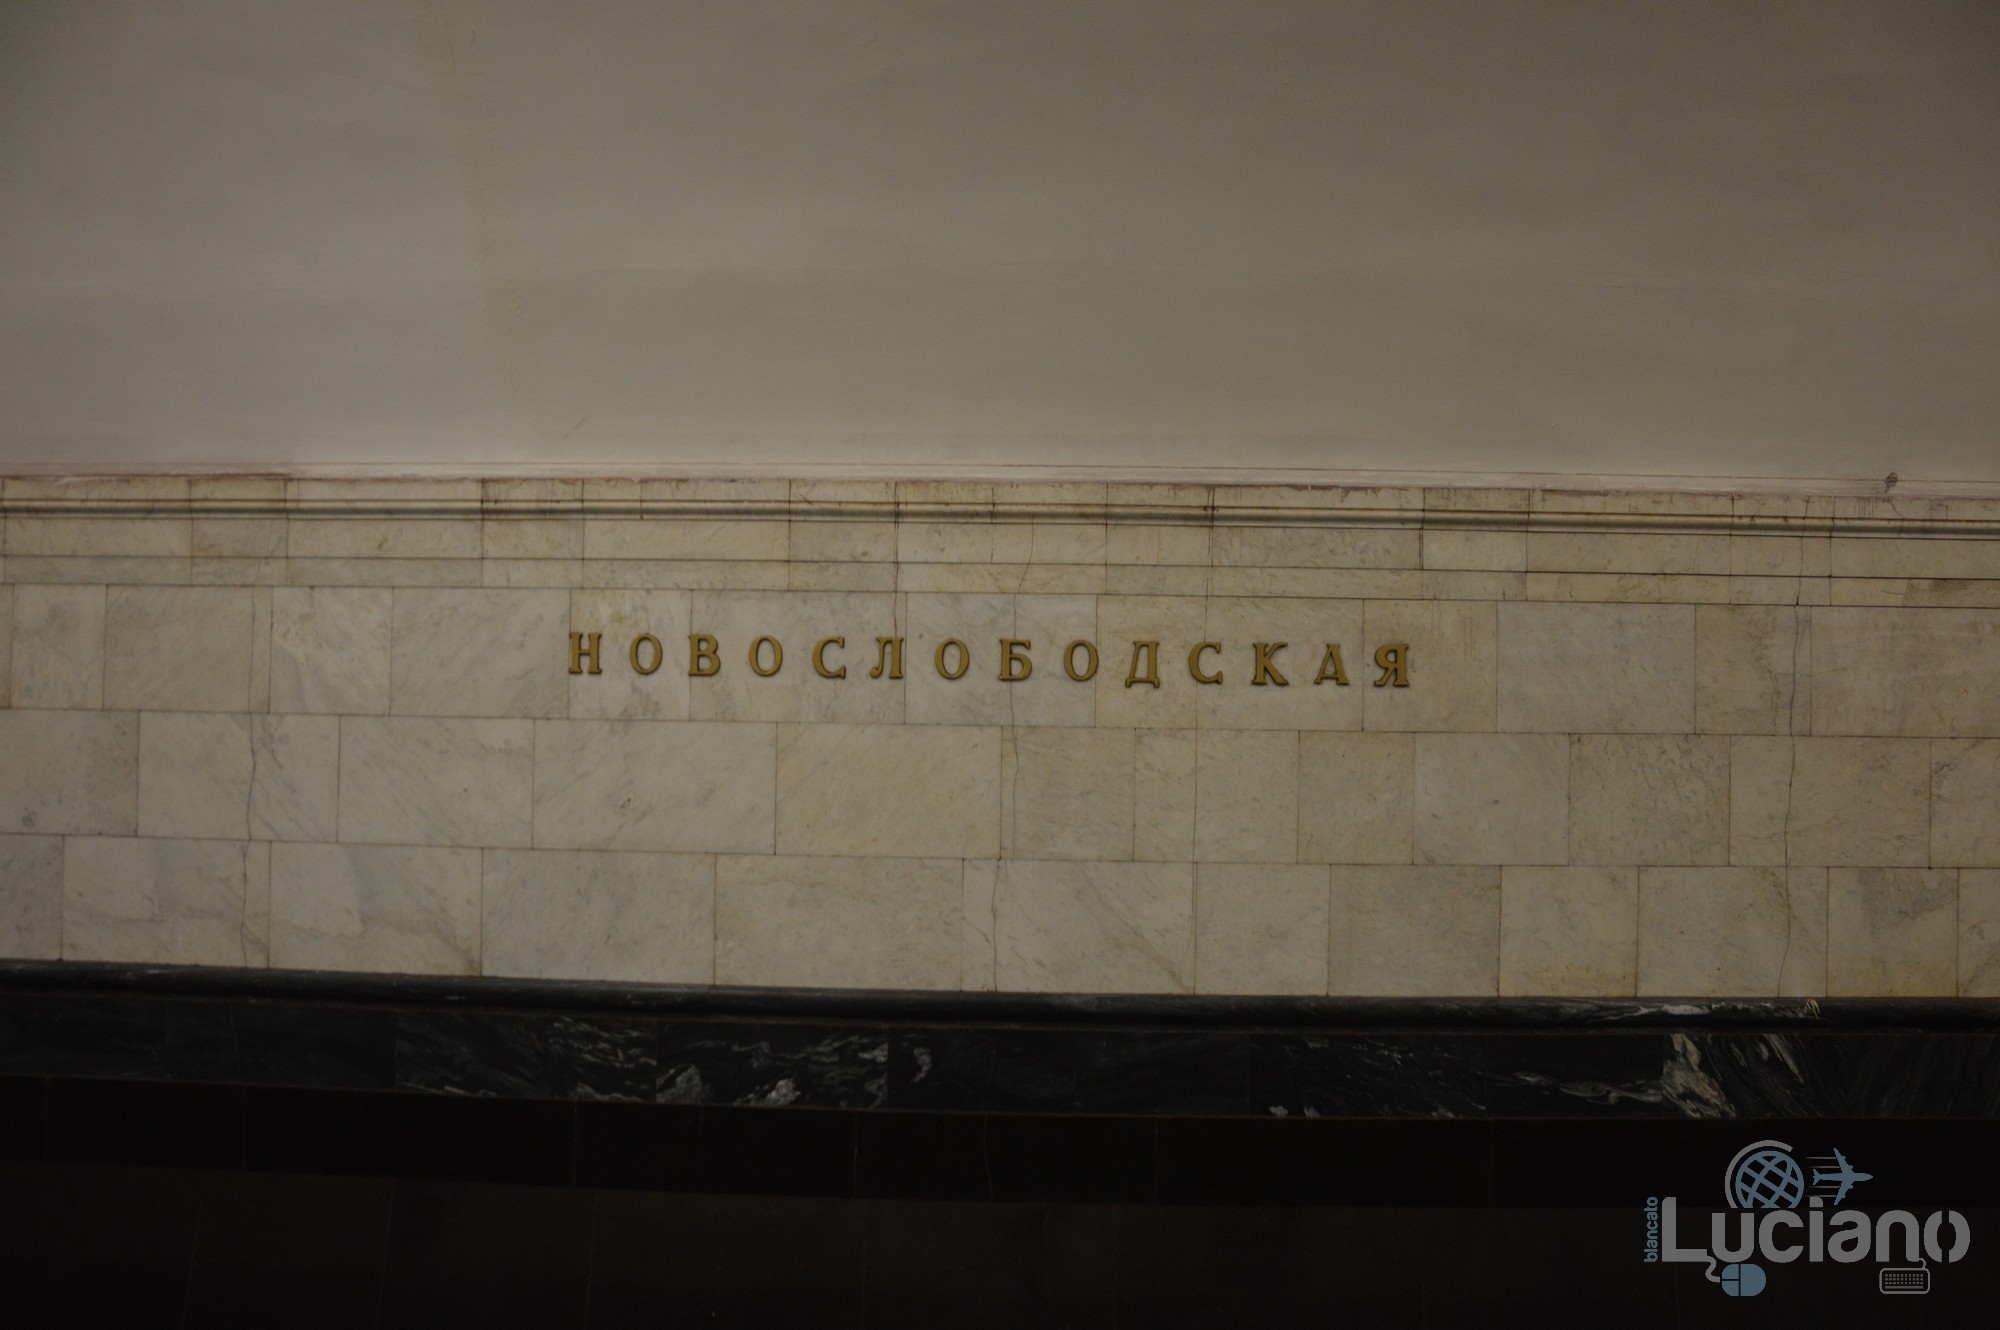 Novoslobodskaya (in russo: Новослободская) - Metro 5 - Metro Circolare Mosca - Russia